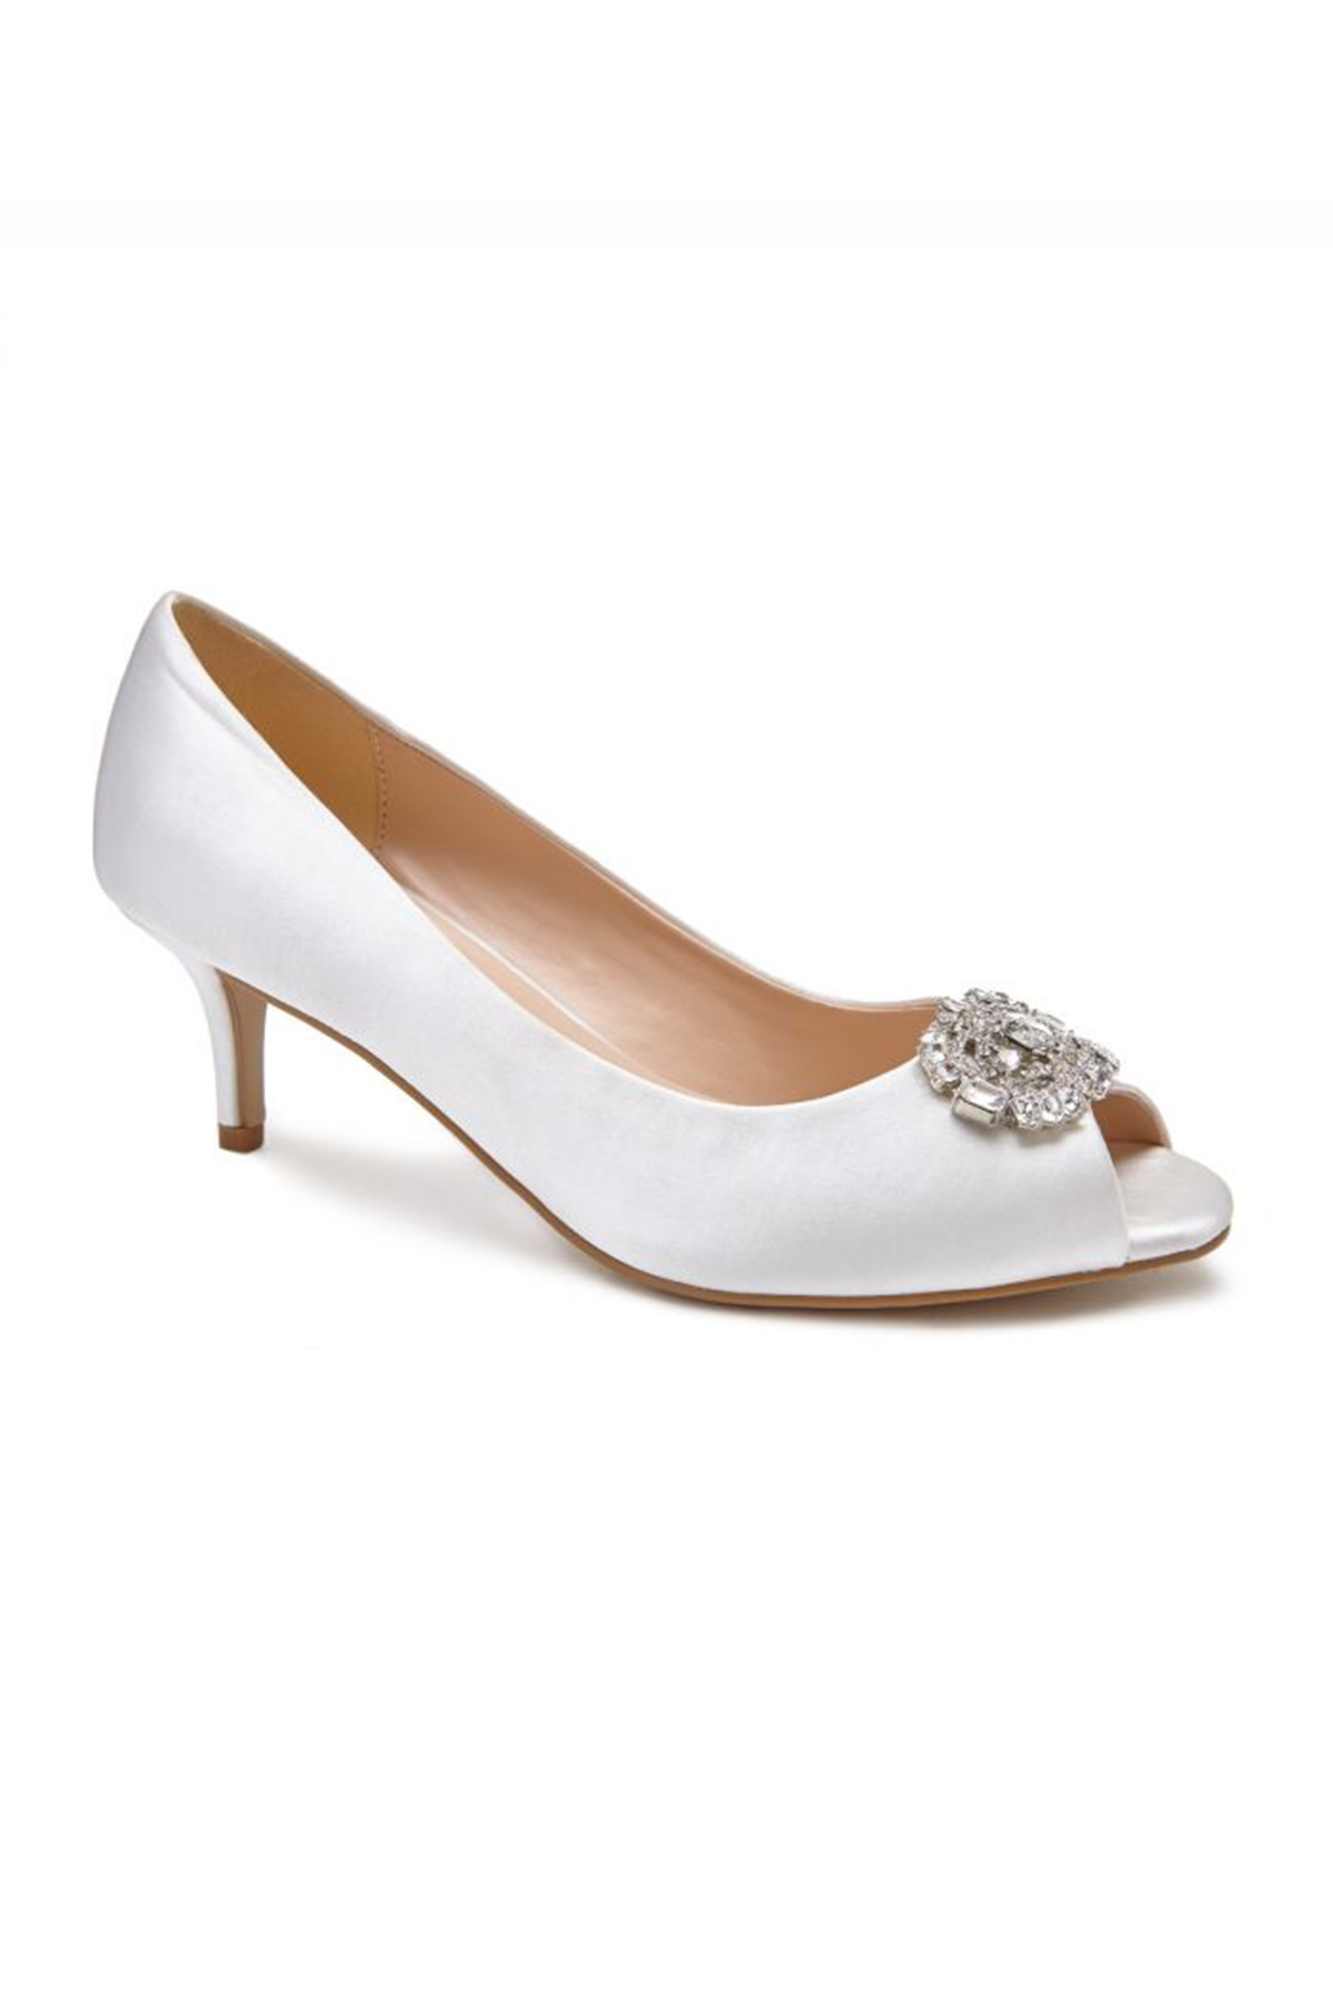 Prunella Shoes | Curvy Chic Bridal - Wide fit shoes